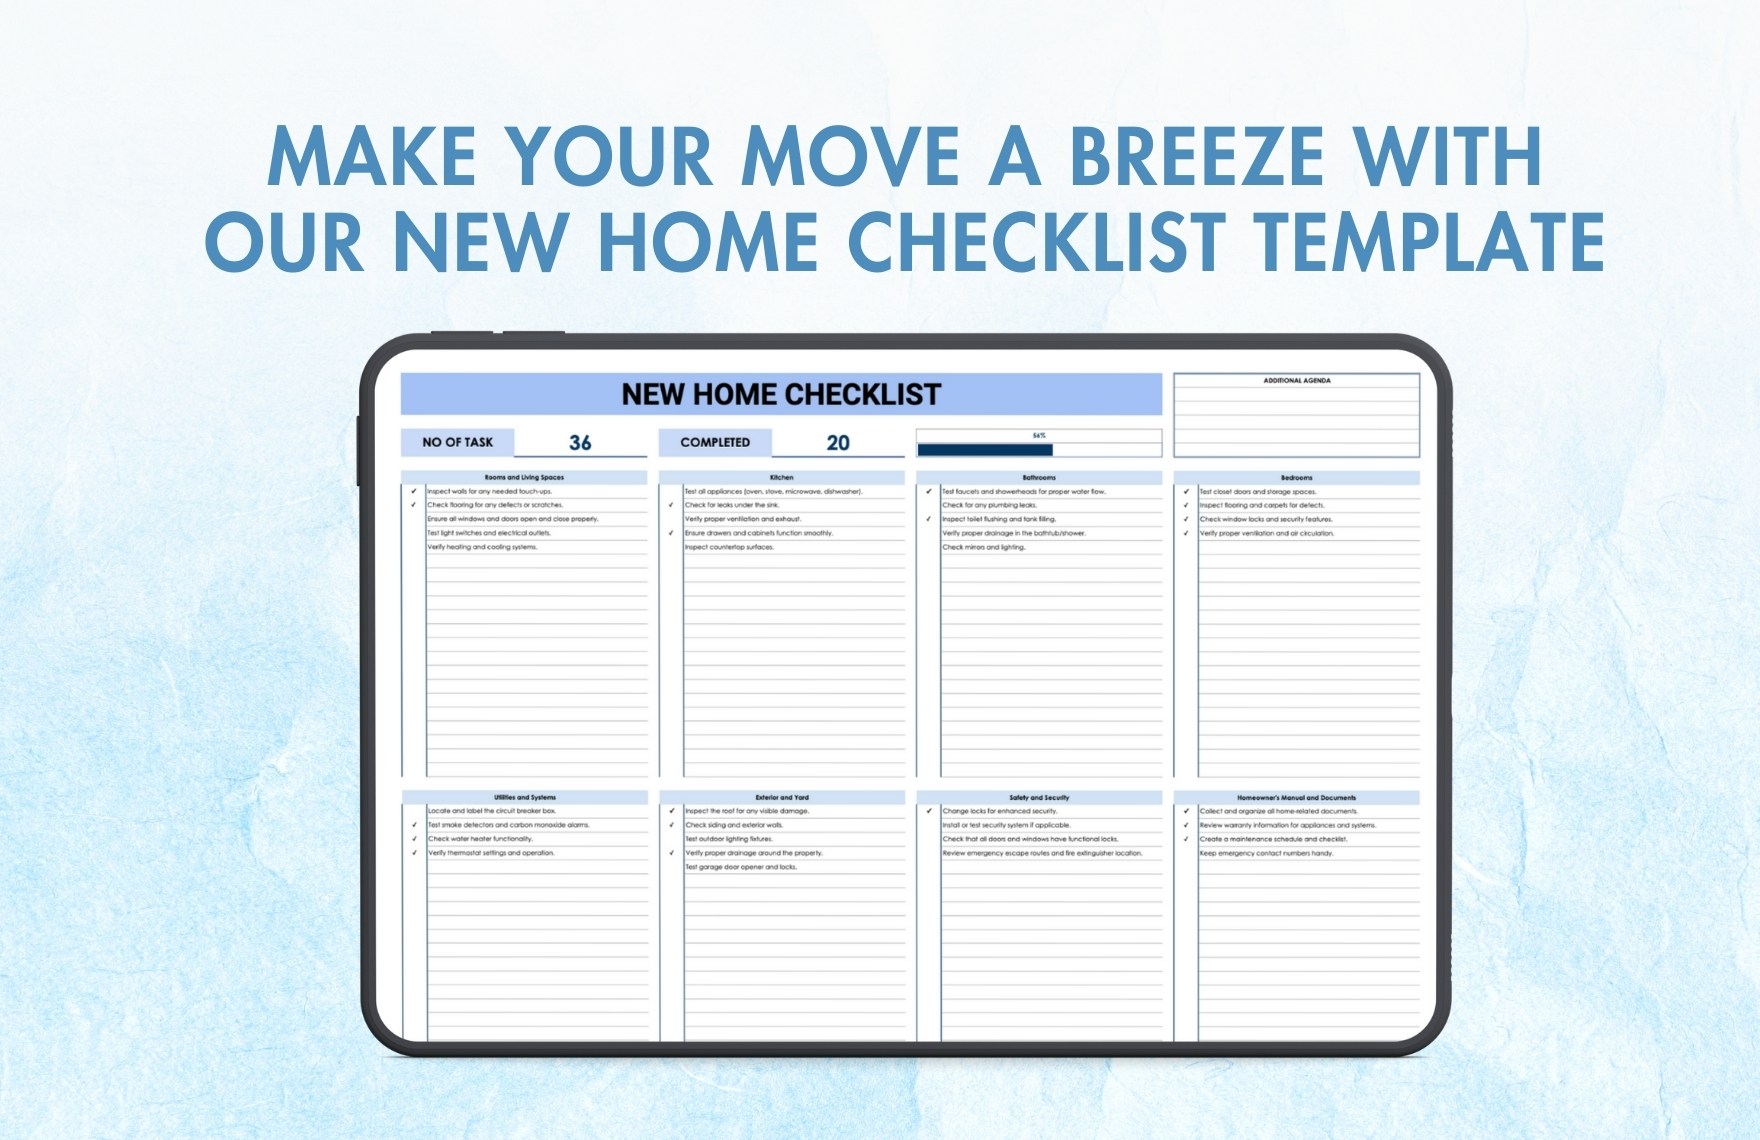 New Home Checklist Template